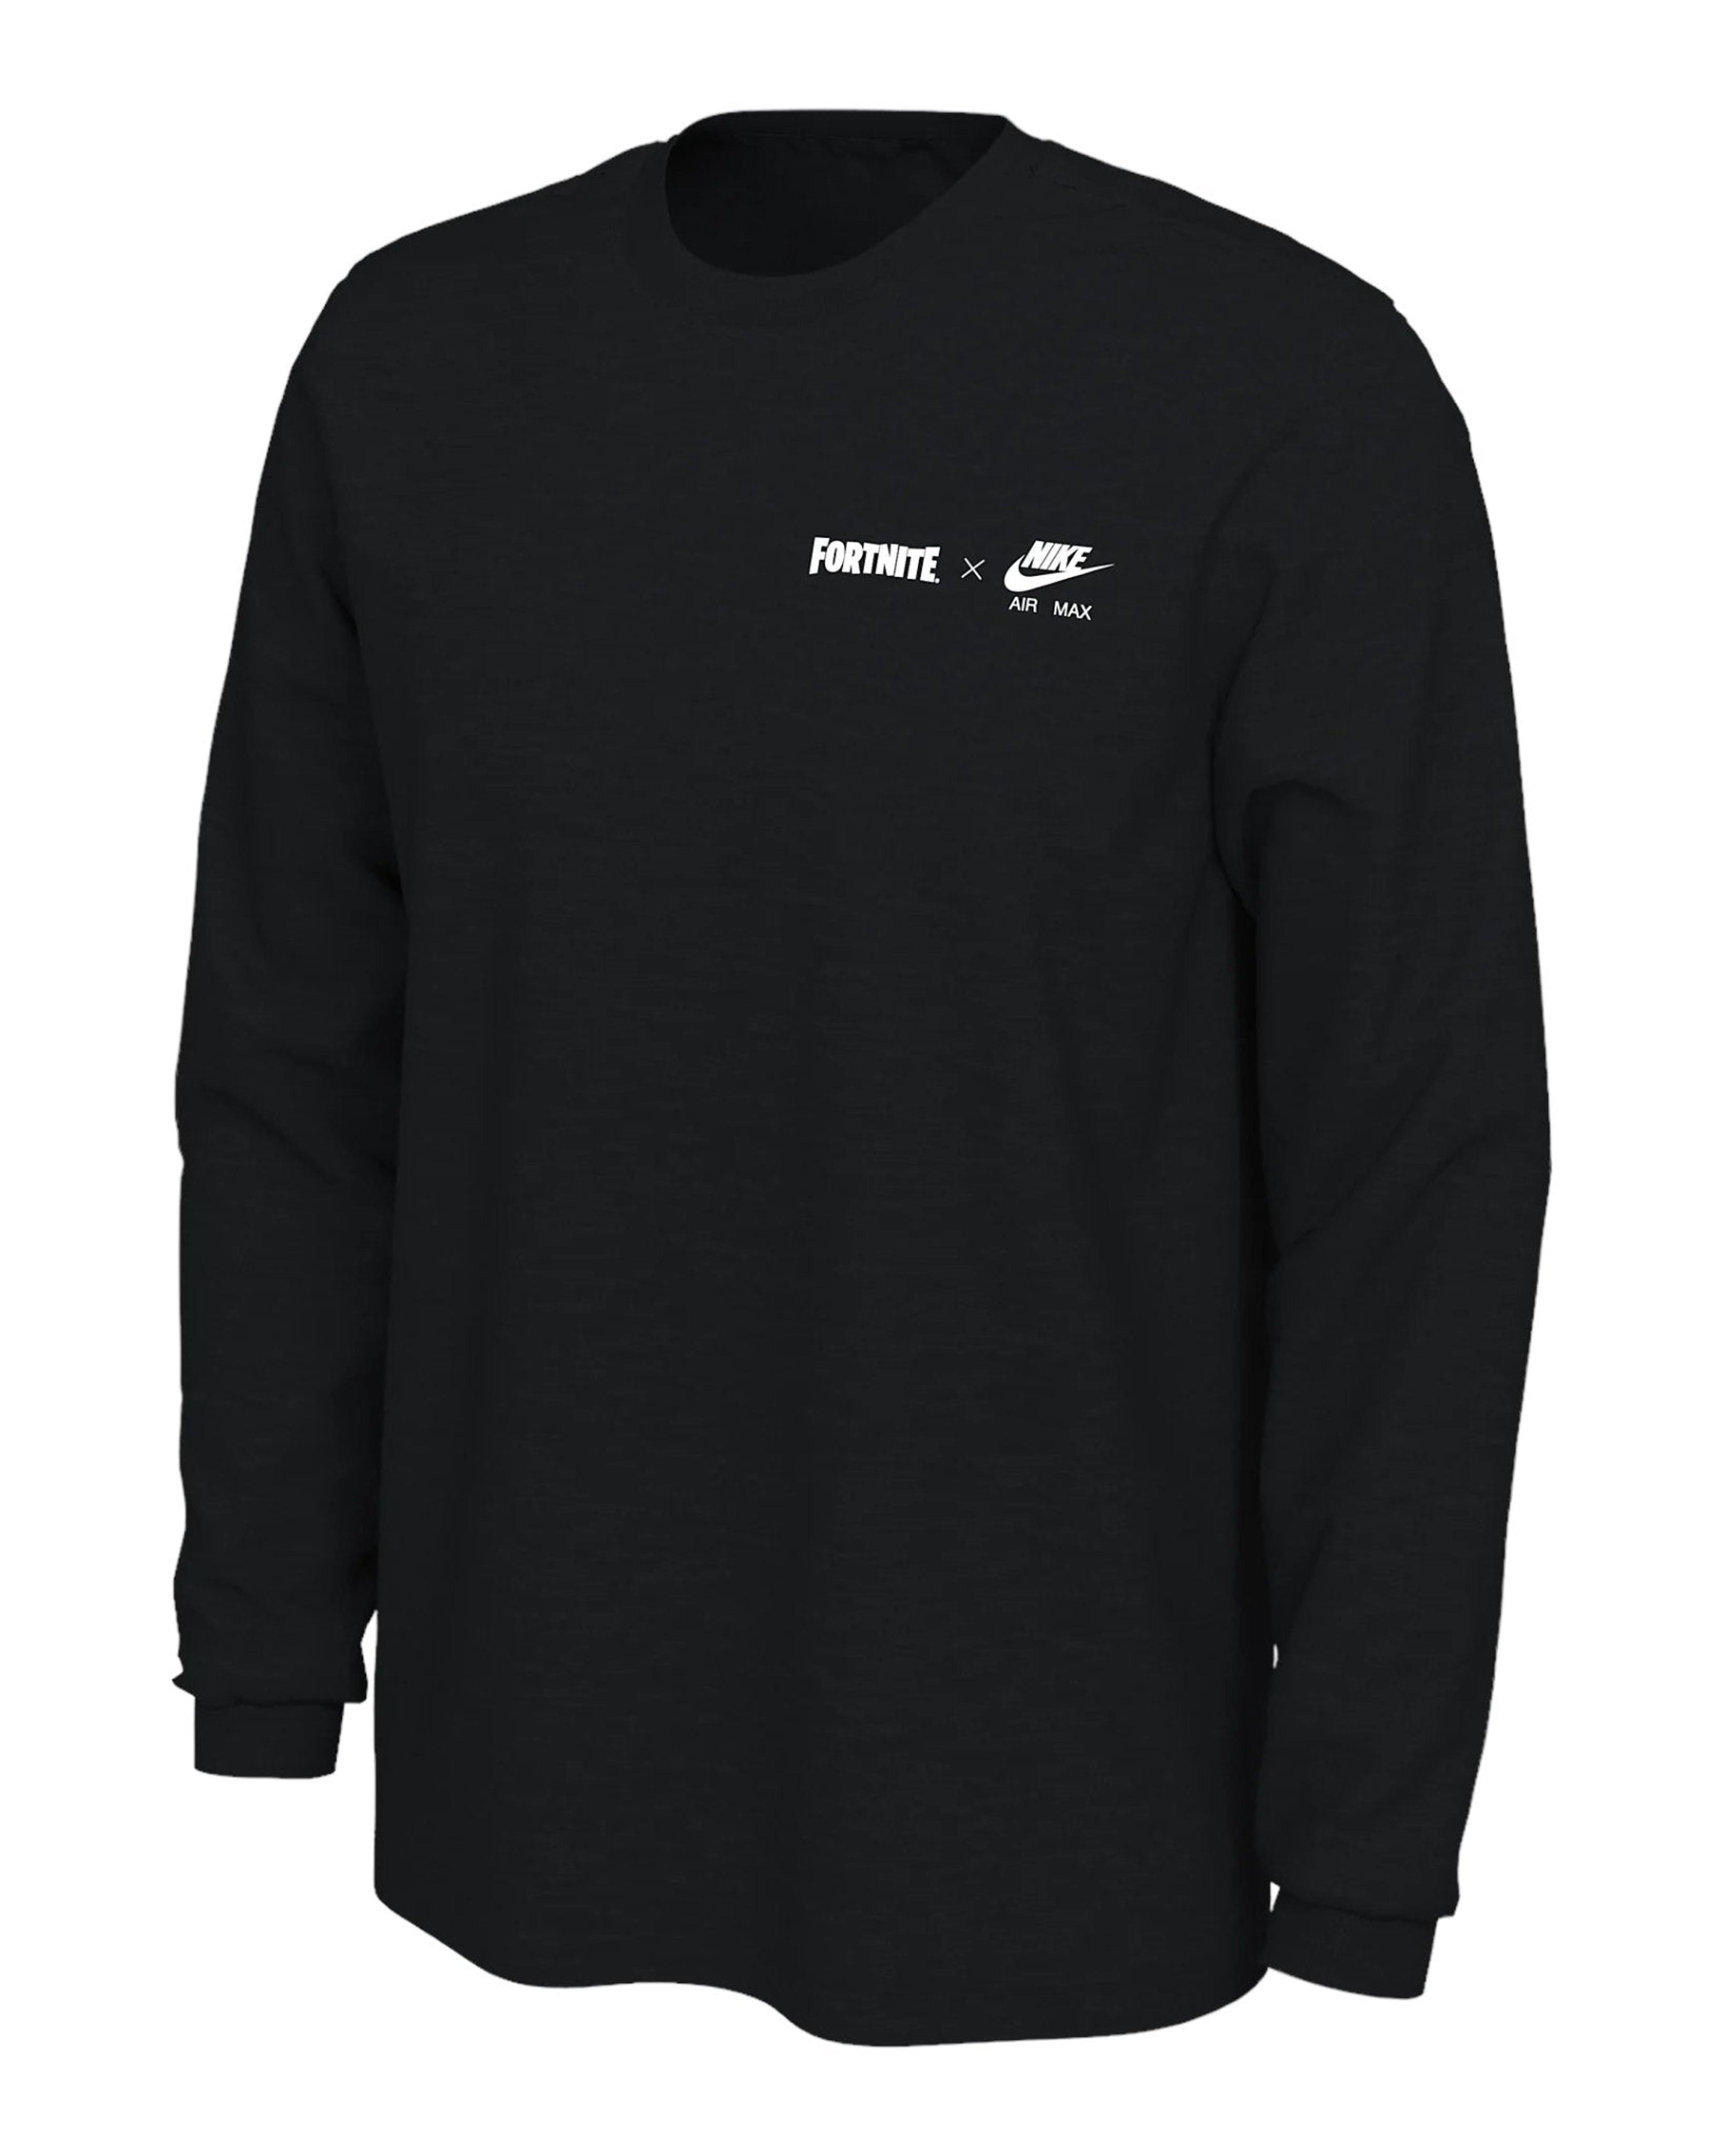 Fortnite x Nike Air Max Men's L/S T-Shirt Black